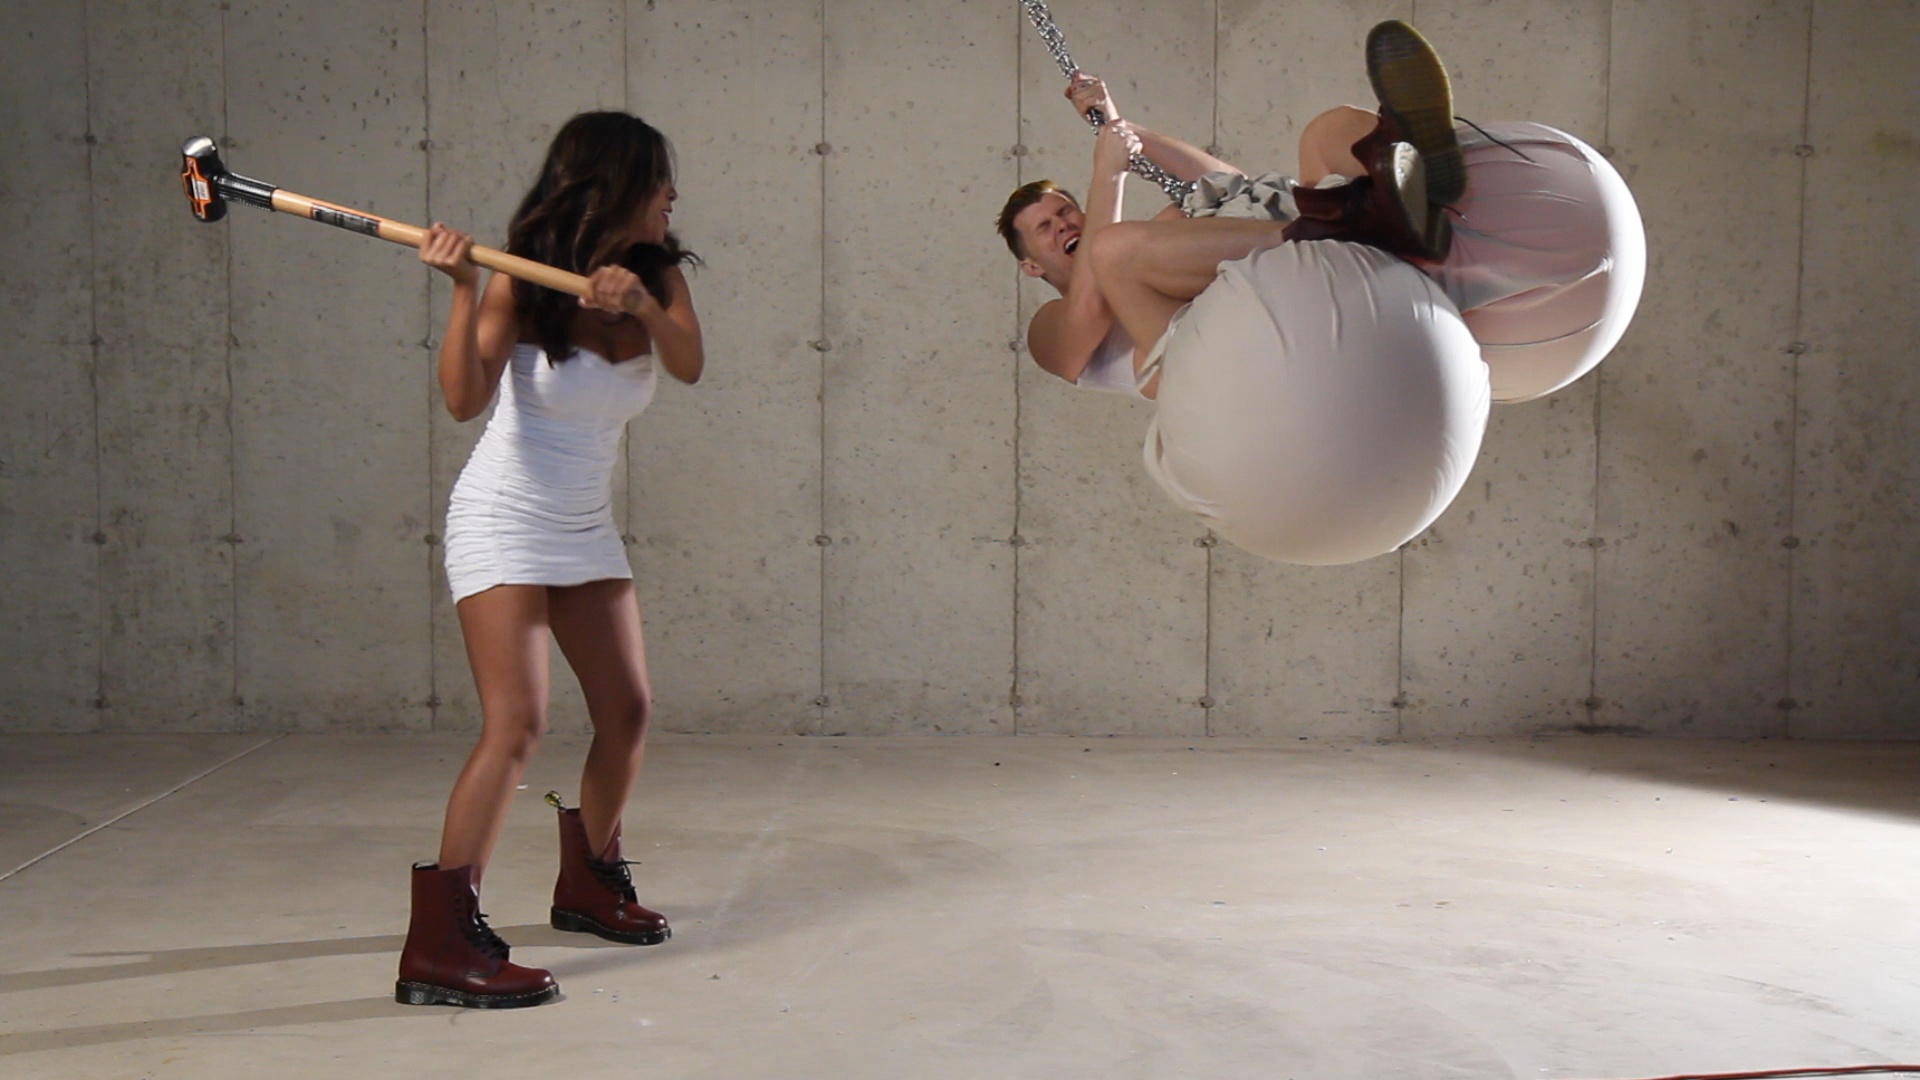 Miley Cyrus "Wrecking Ball" Parody by Tanning Chatum aka Dong Shu...